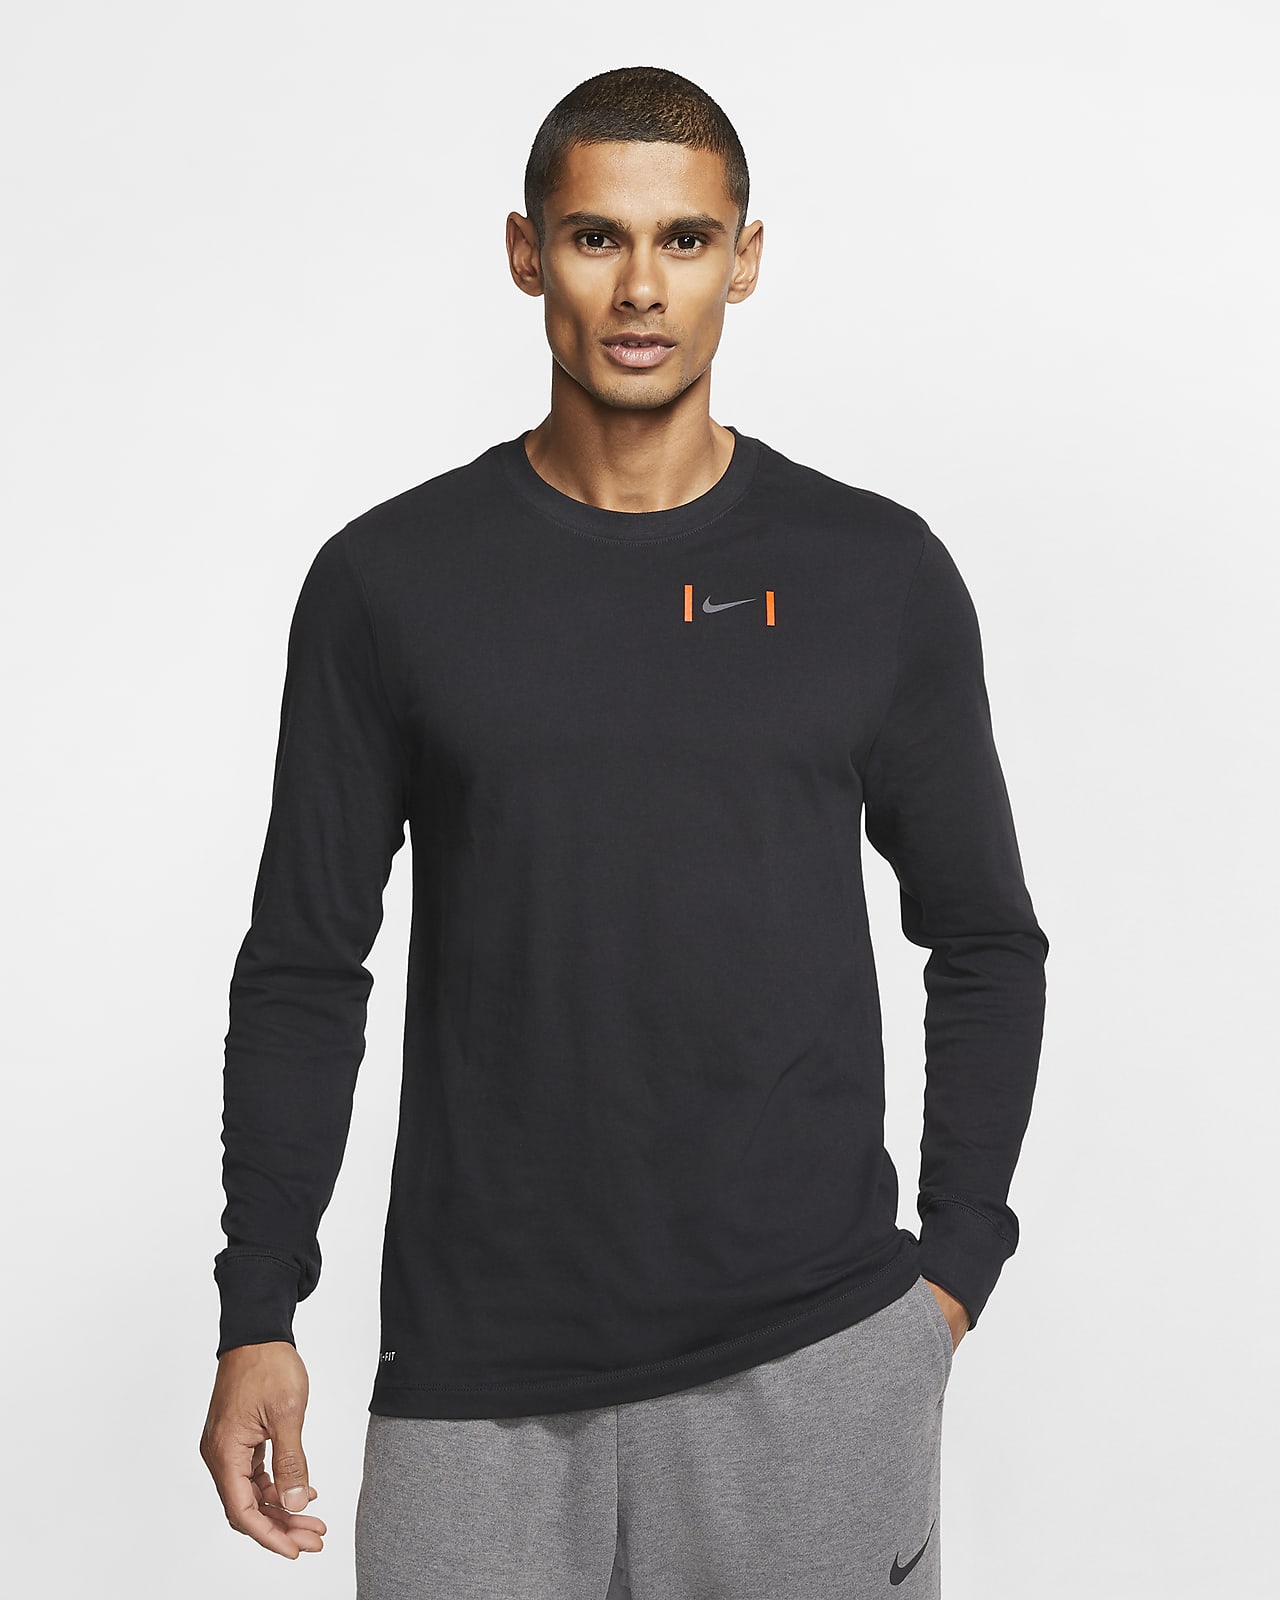 race unconditional minor Nike Dri-FIT Men's Long-Sleeve Football T-Shirt. Nike.com